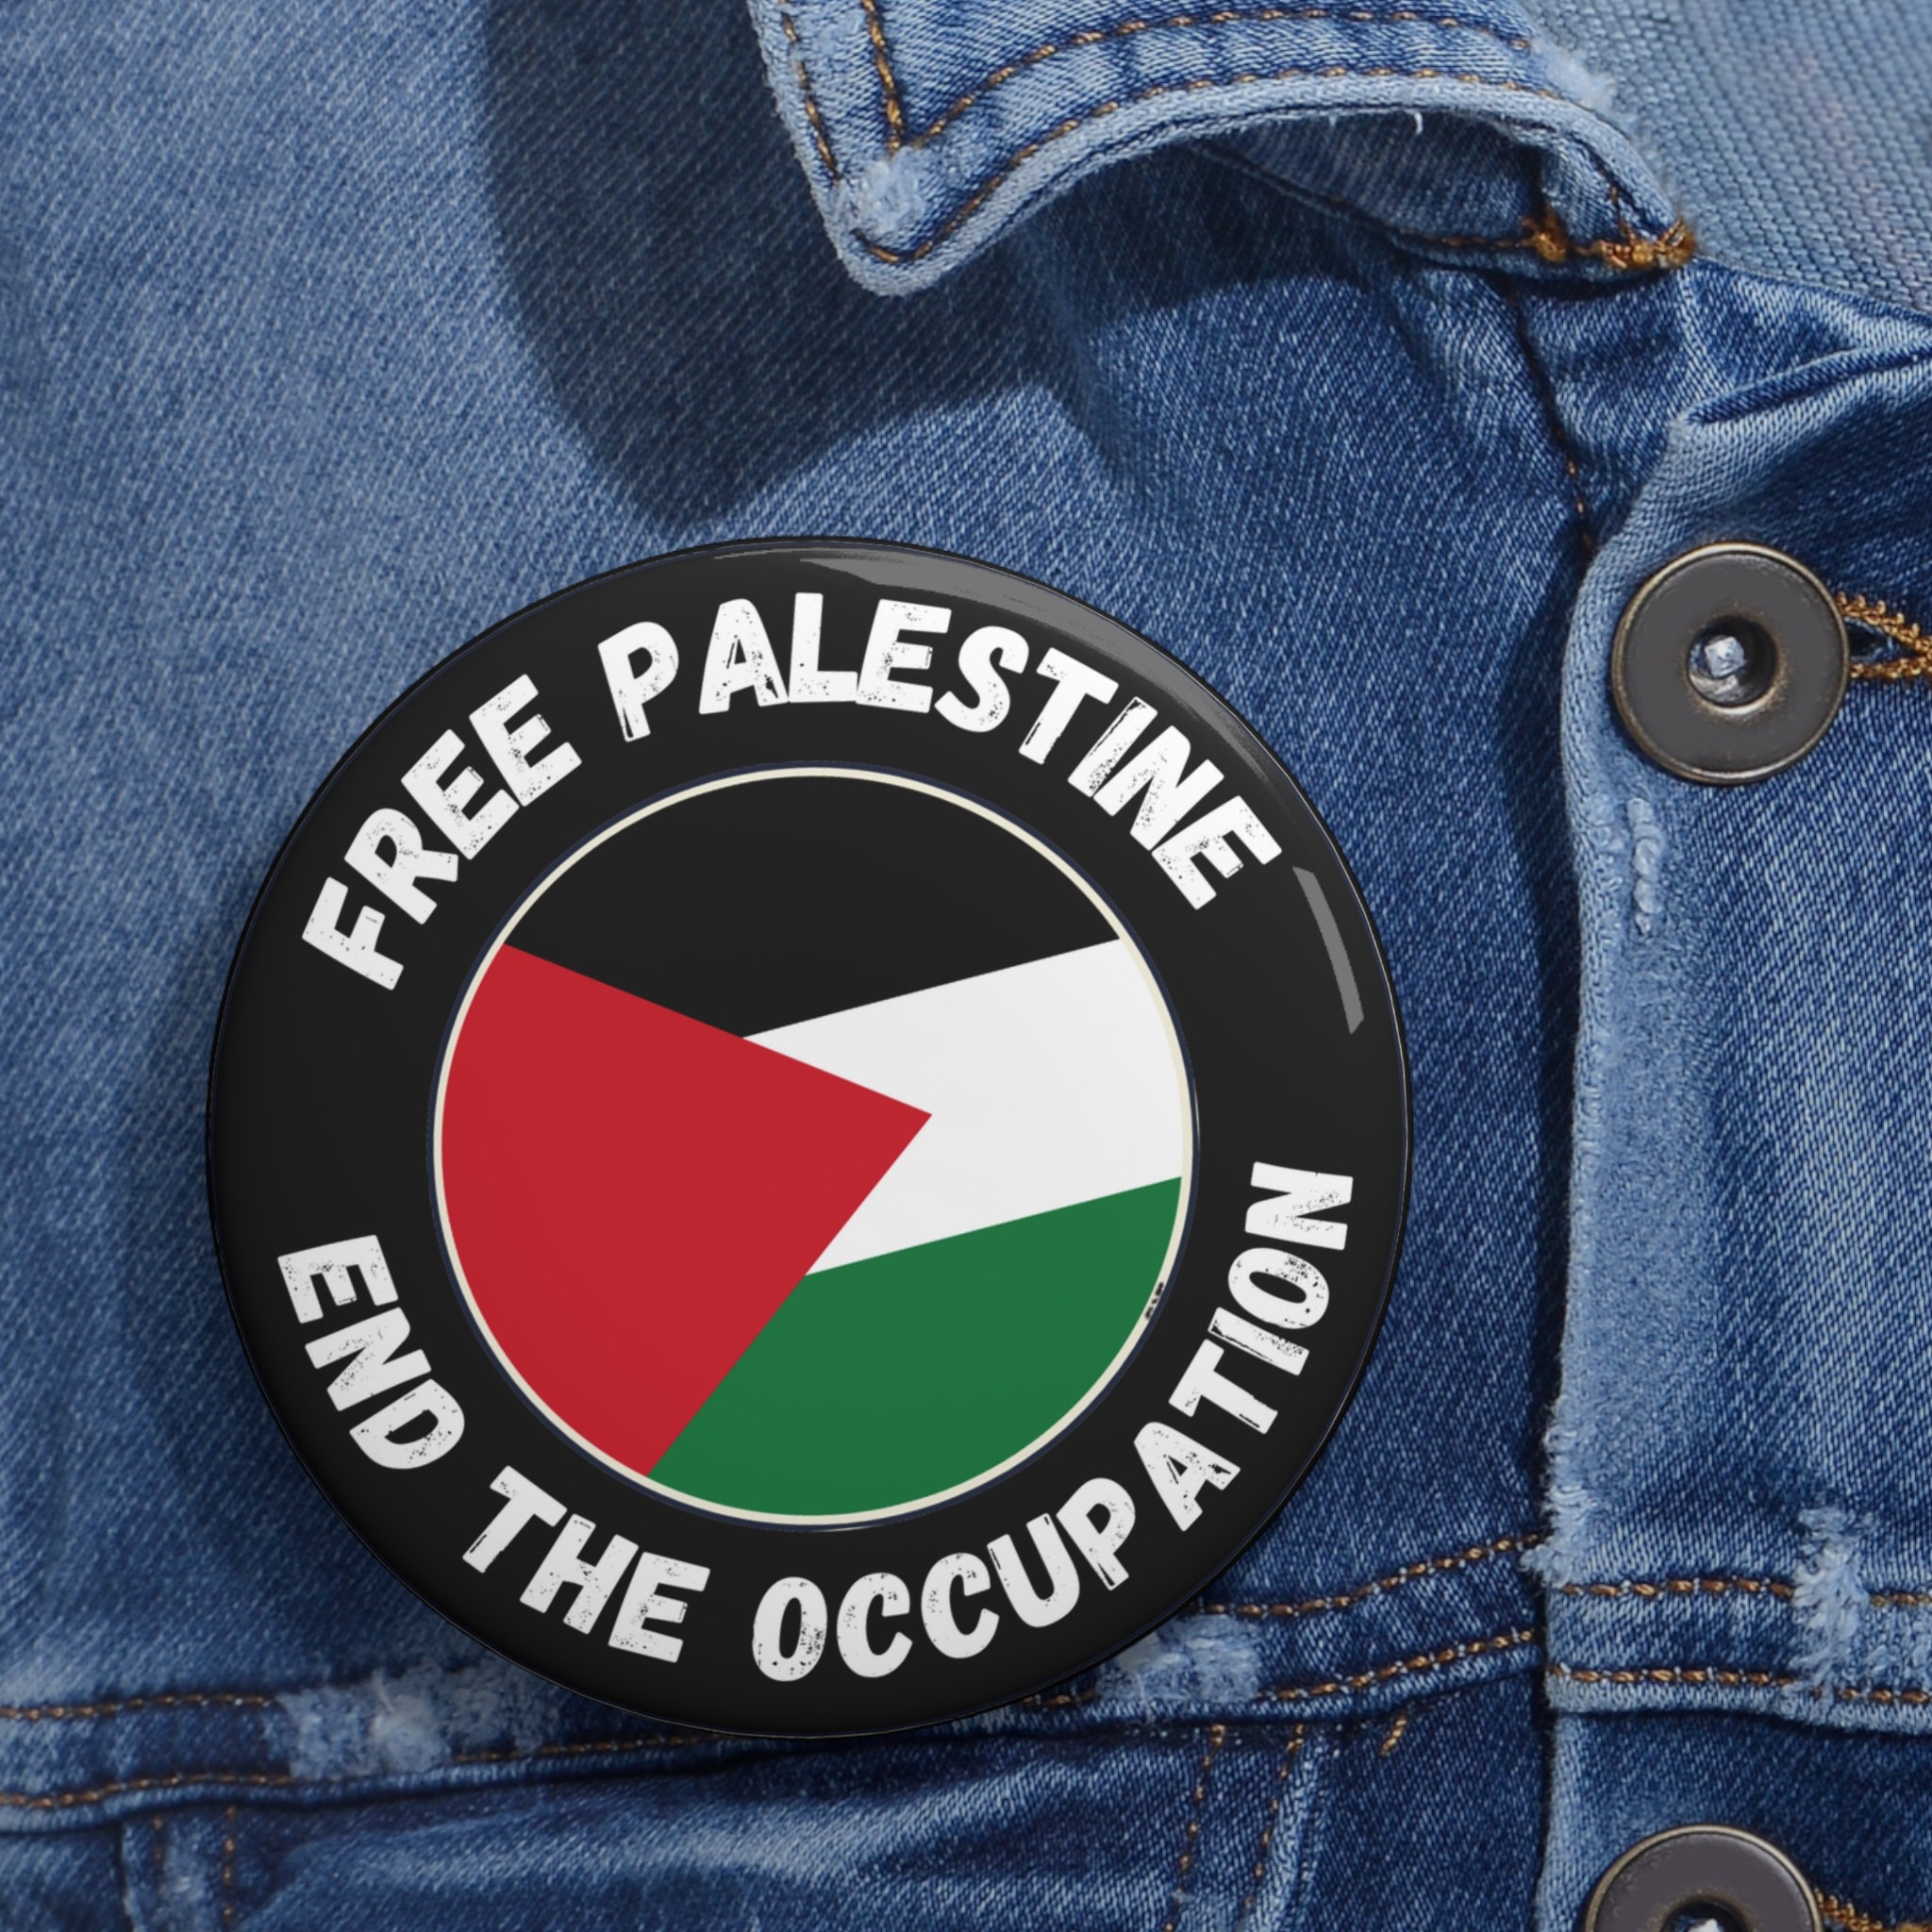 Palestine Pin Palestinian Freedom Flag – Muslim Memories